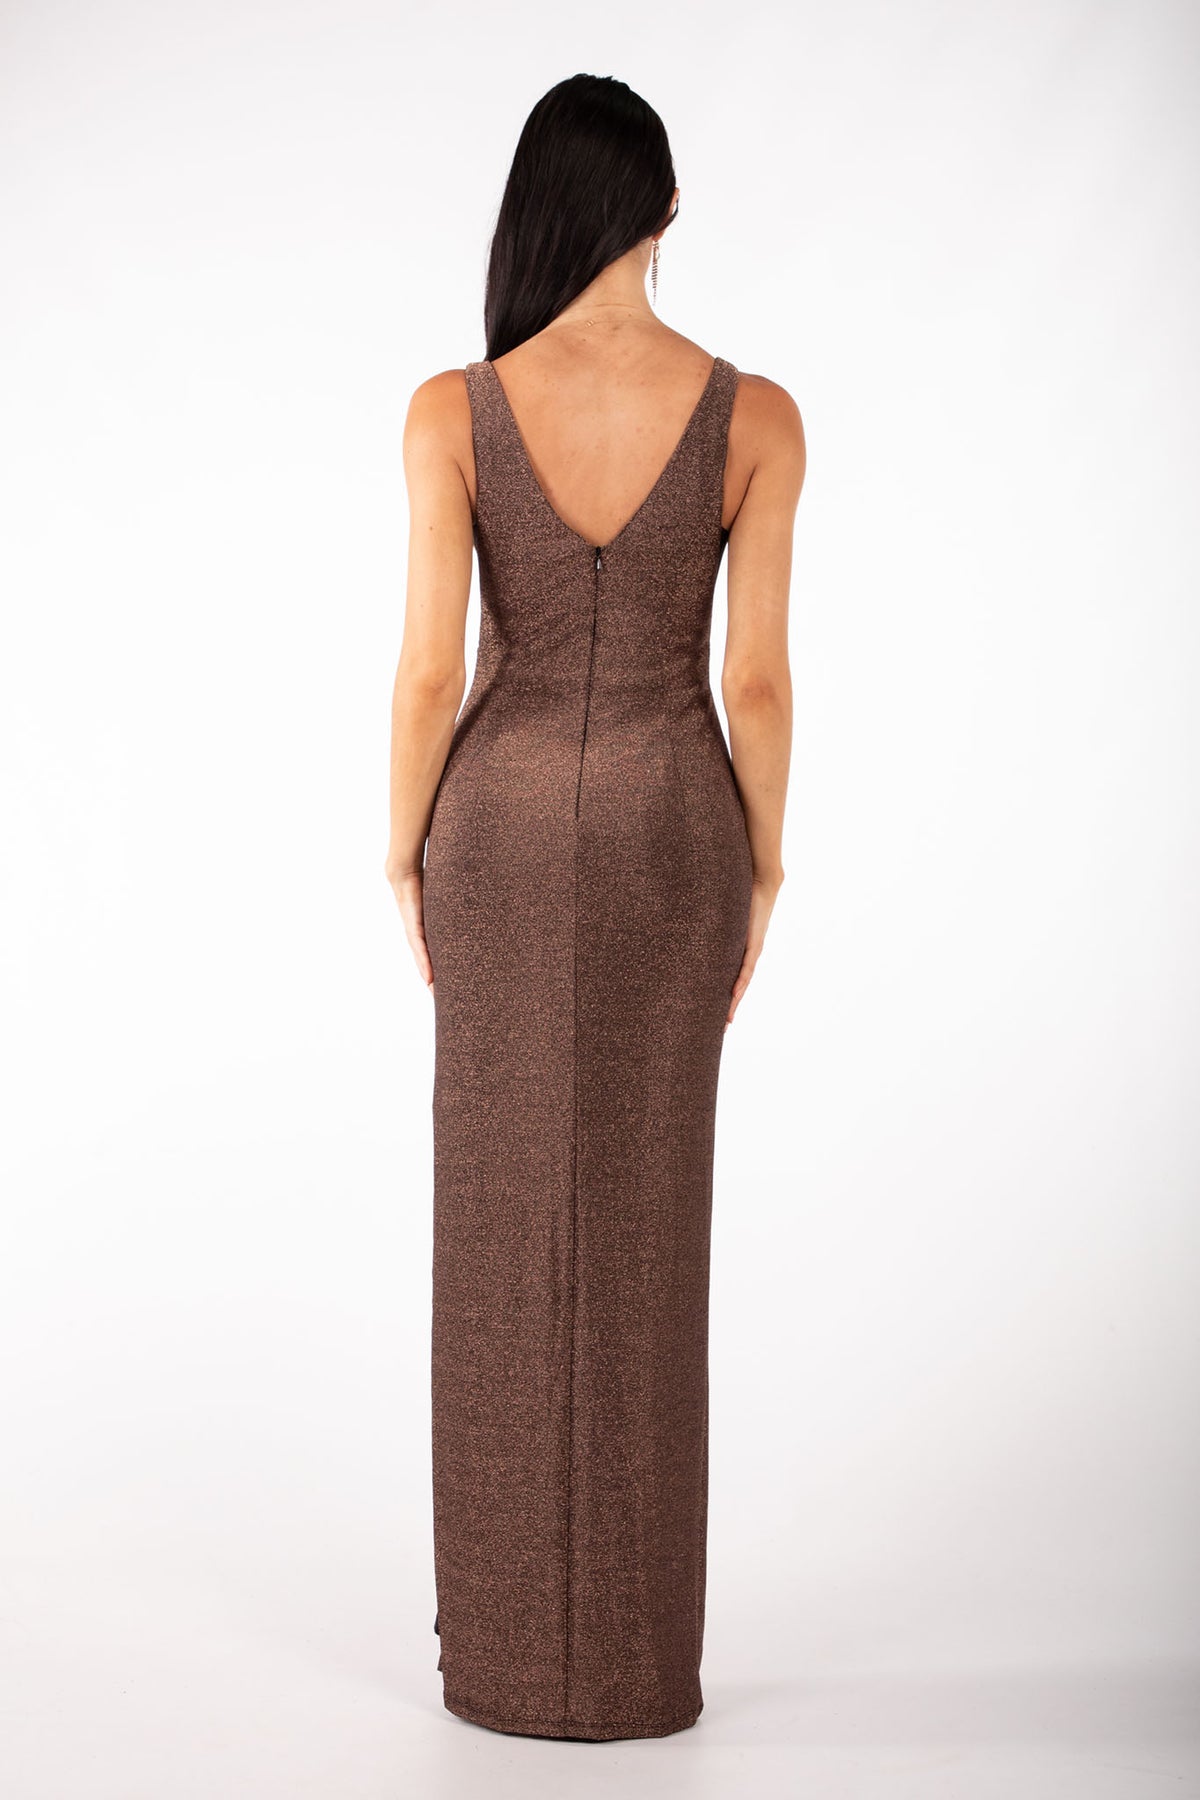 Back Image of V Neck Formal Maxi Dress with Gathering Detail, Side Split and Open V Back in Glitter Chocolate Brown Color